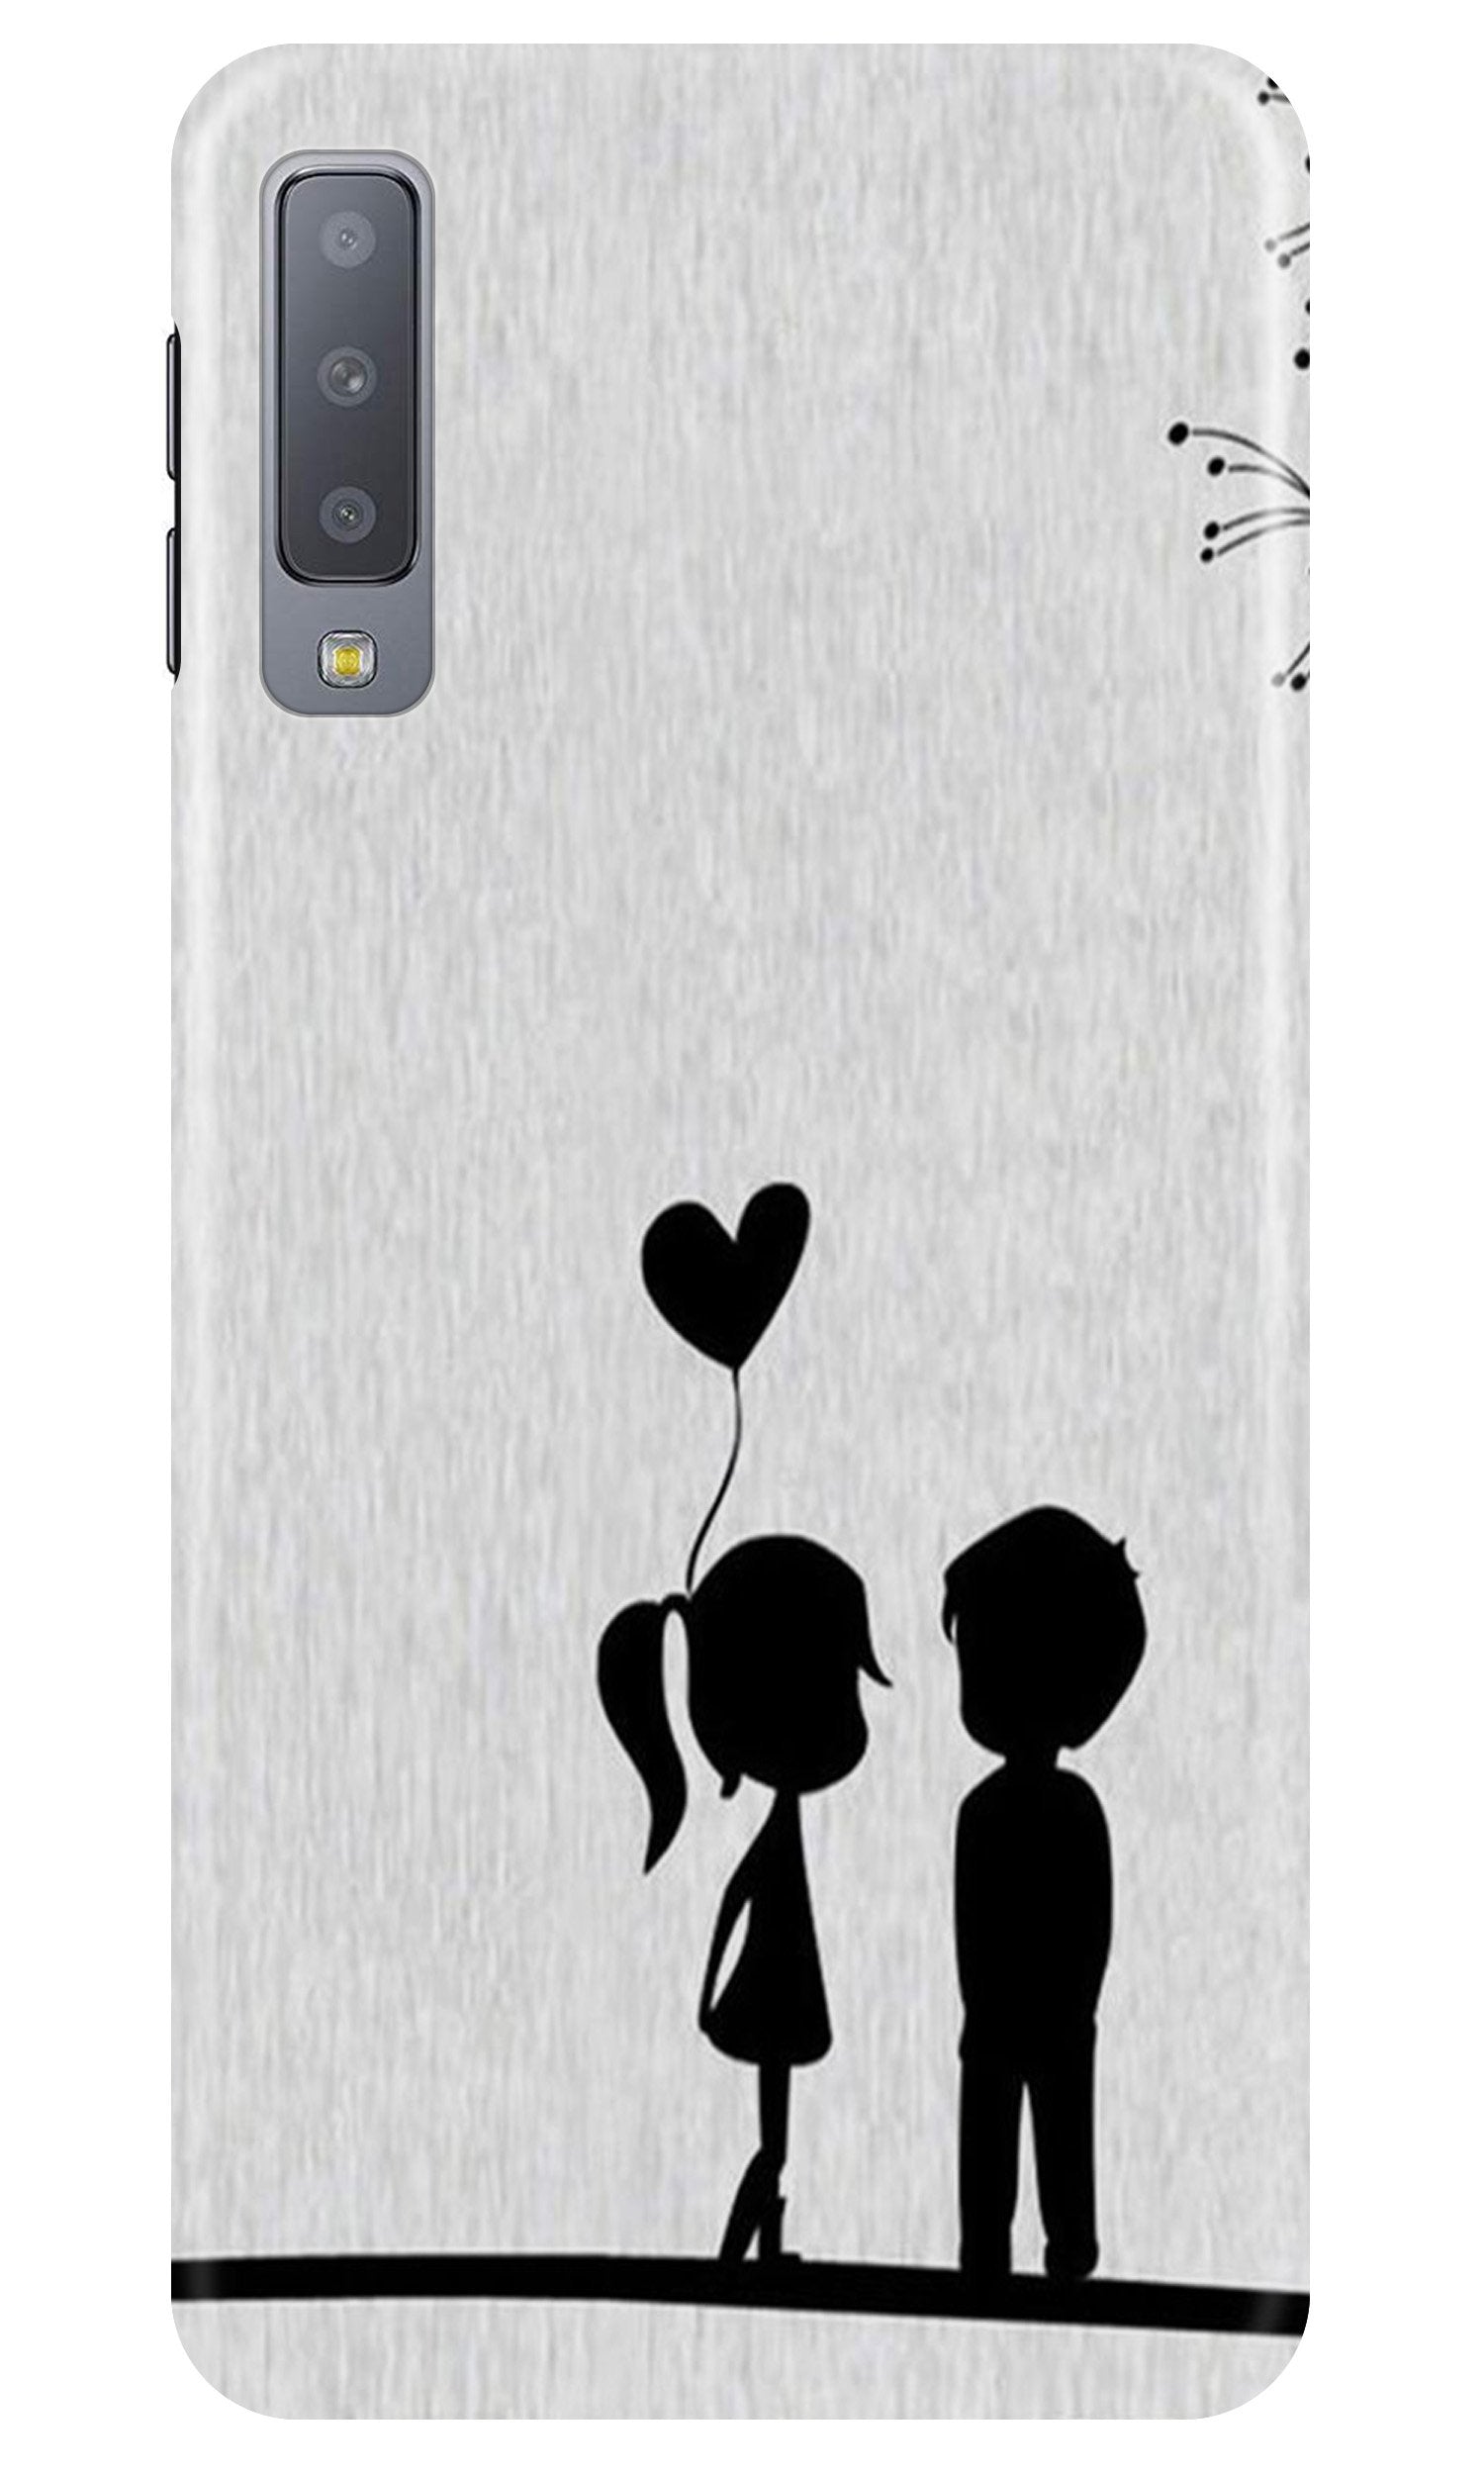 Cute Kid Couple Case for Samung Galaxy A70s (Design No. 283)